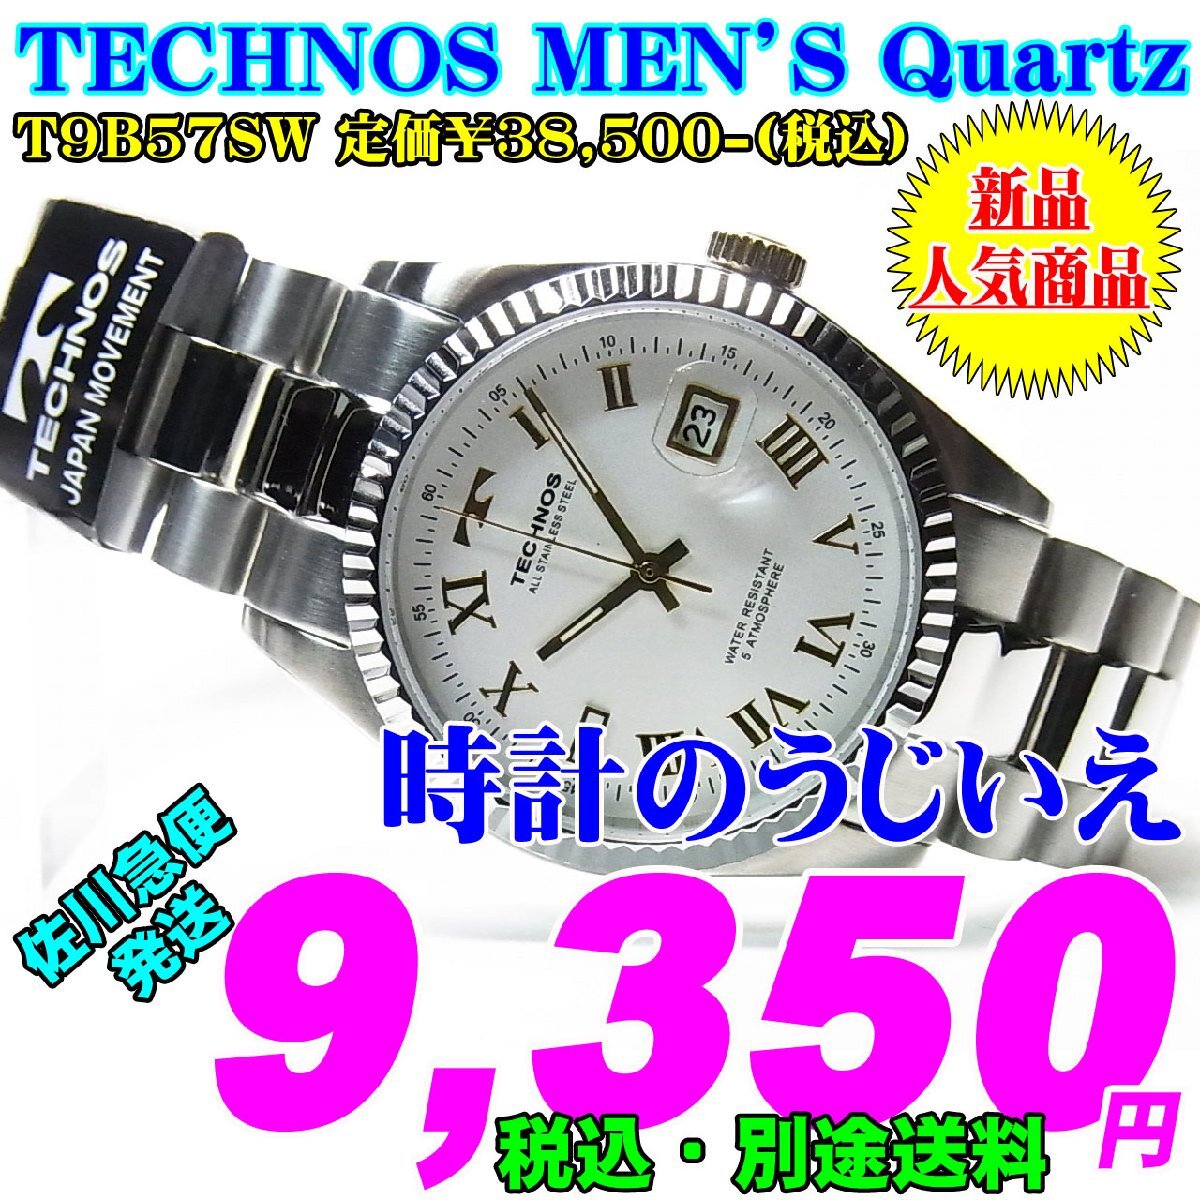 TECHNOS Tecnos MEN\'S джентльмен Quartz кварц T9B57SW обычная цена Y38,500-( включая налог ) новый товар.